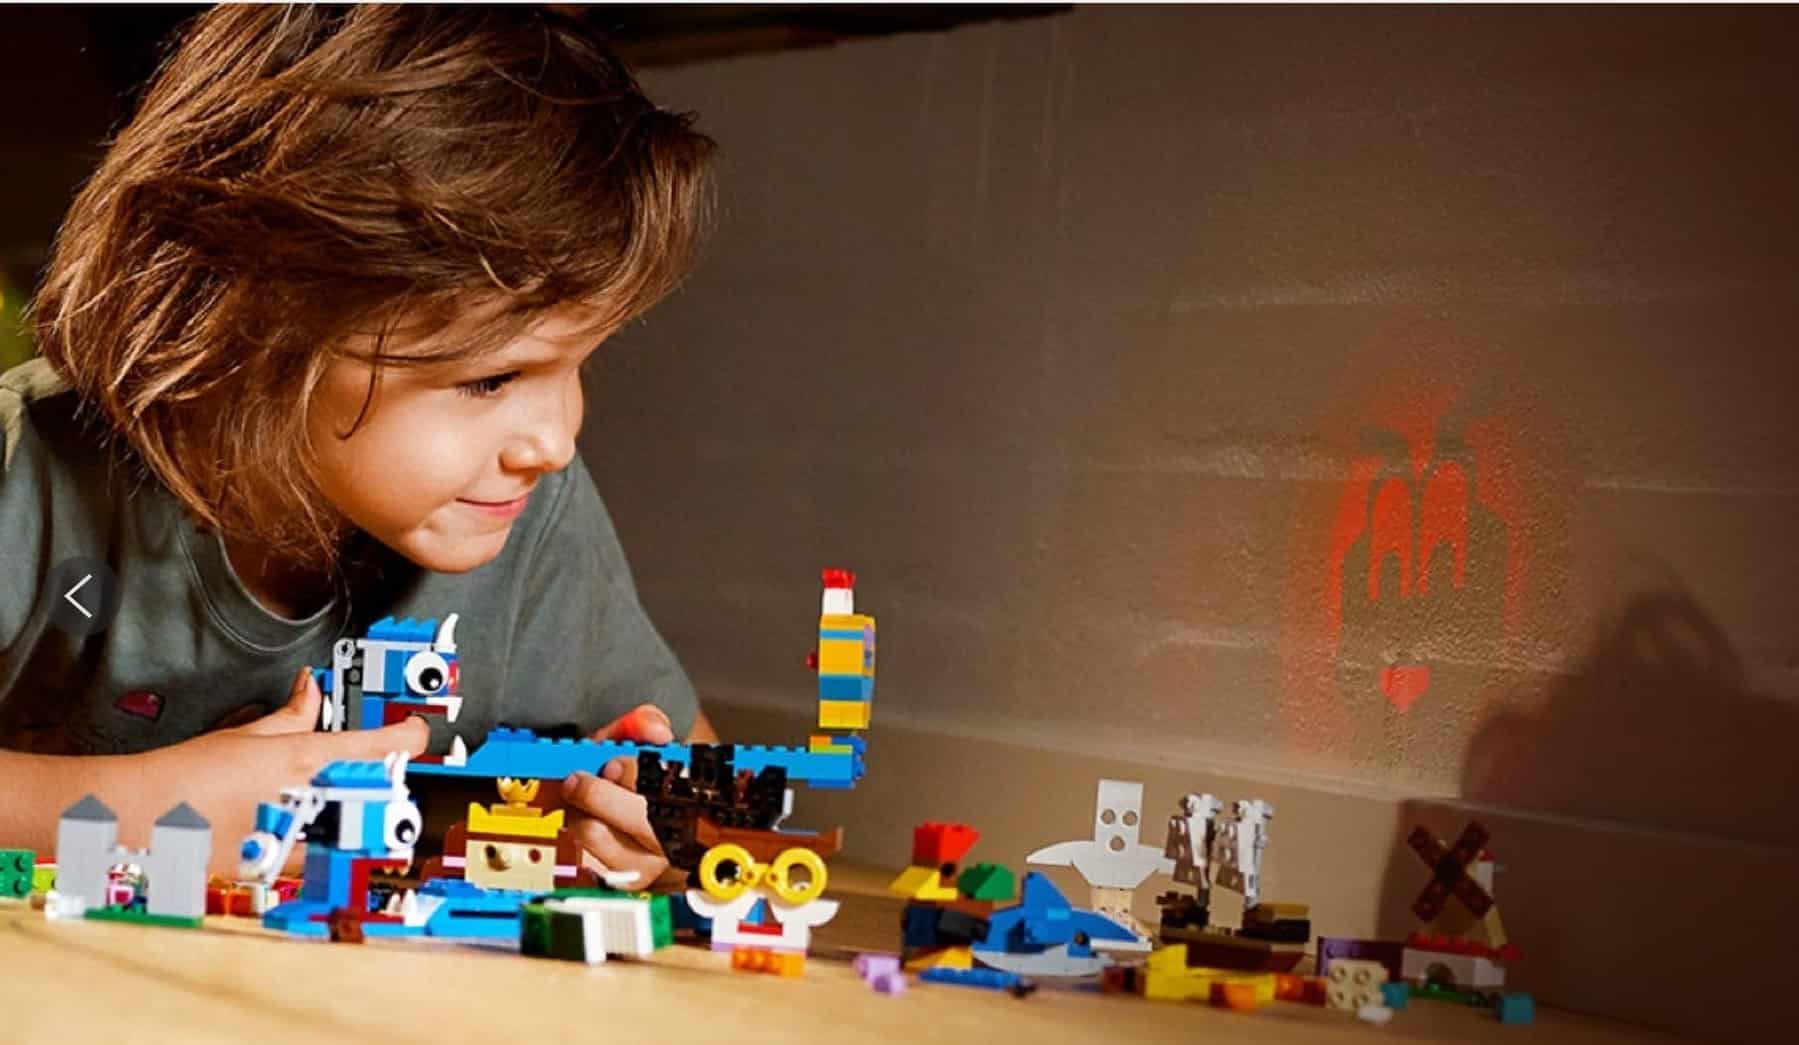 Lego kopen bij Lego.com